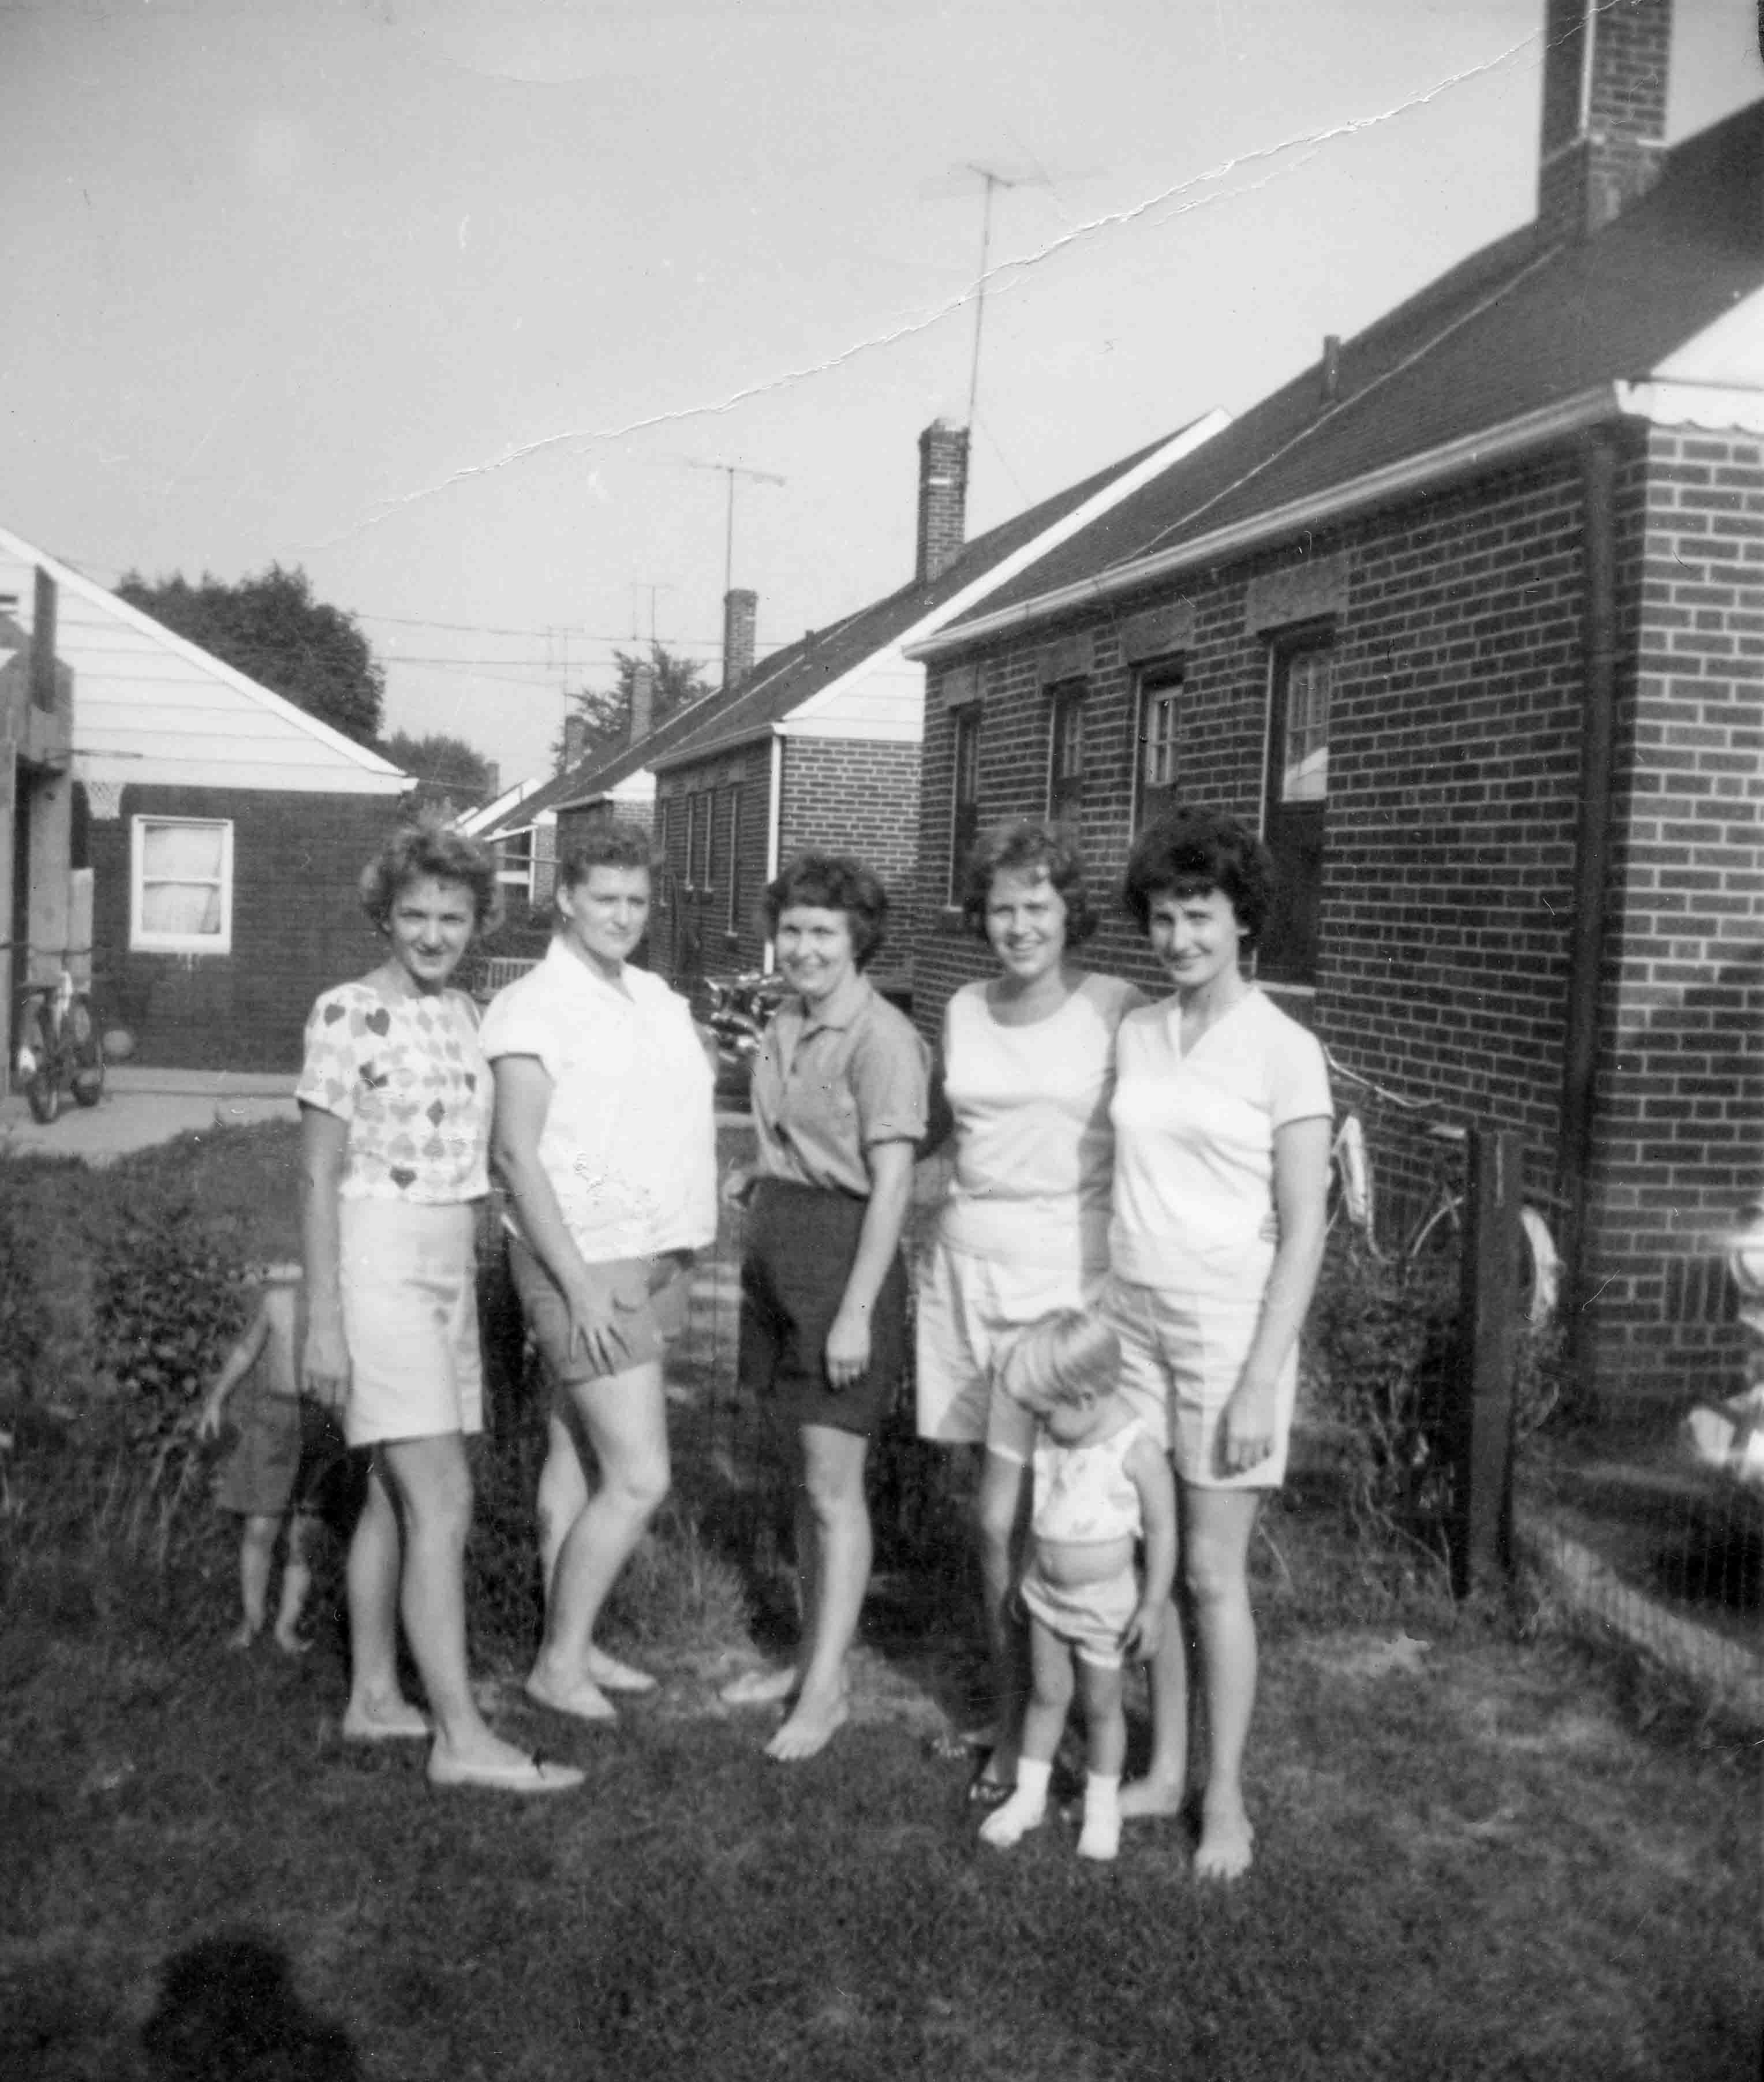 Eva Brooks Sterling, Jane Brooks Thomas, Carol Curtis, Janet Brooks, ?,?
Location:  Backyard at 1059 Lindsay Ave, Akron, OH
Source:  Carol Curtis
Date:  1963